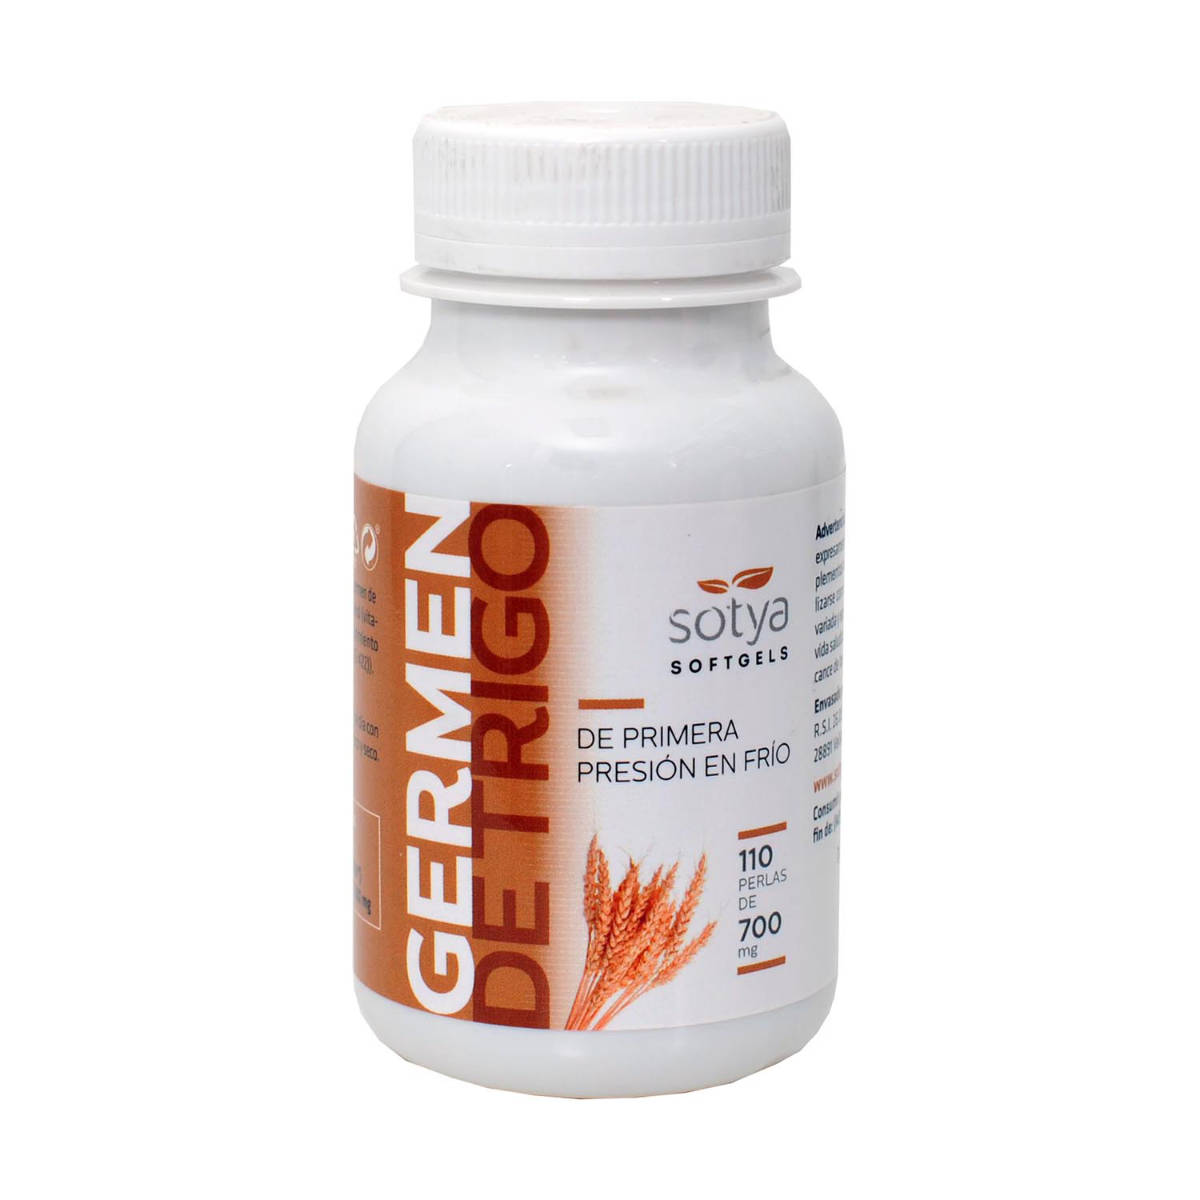 Sotya-Germen-Trigo-700-Mg-110-Perlas-Biopharmacia,-Parafarmacia-online